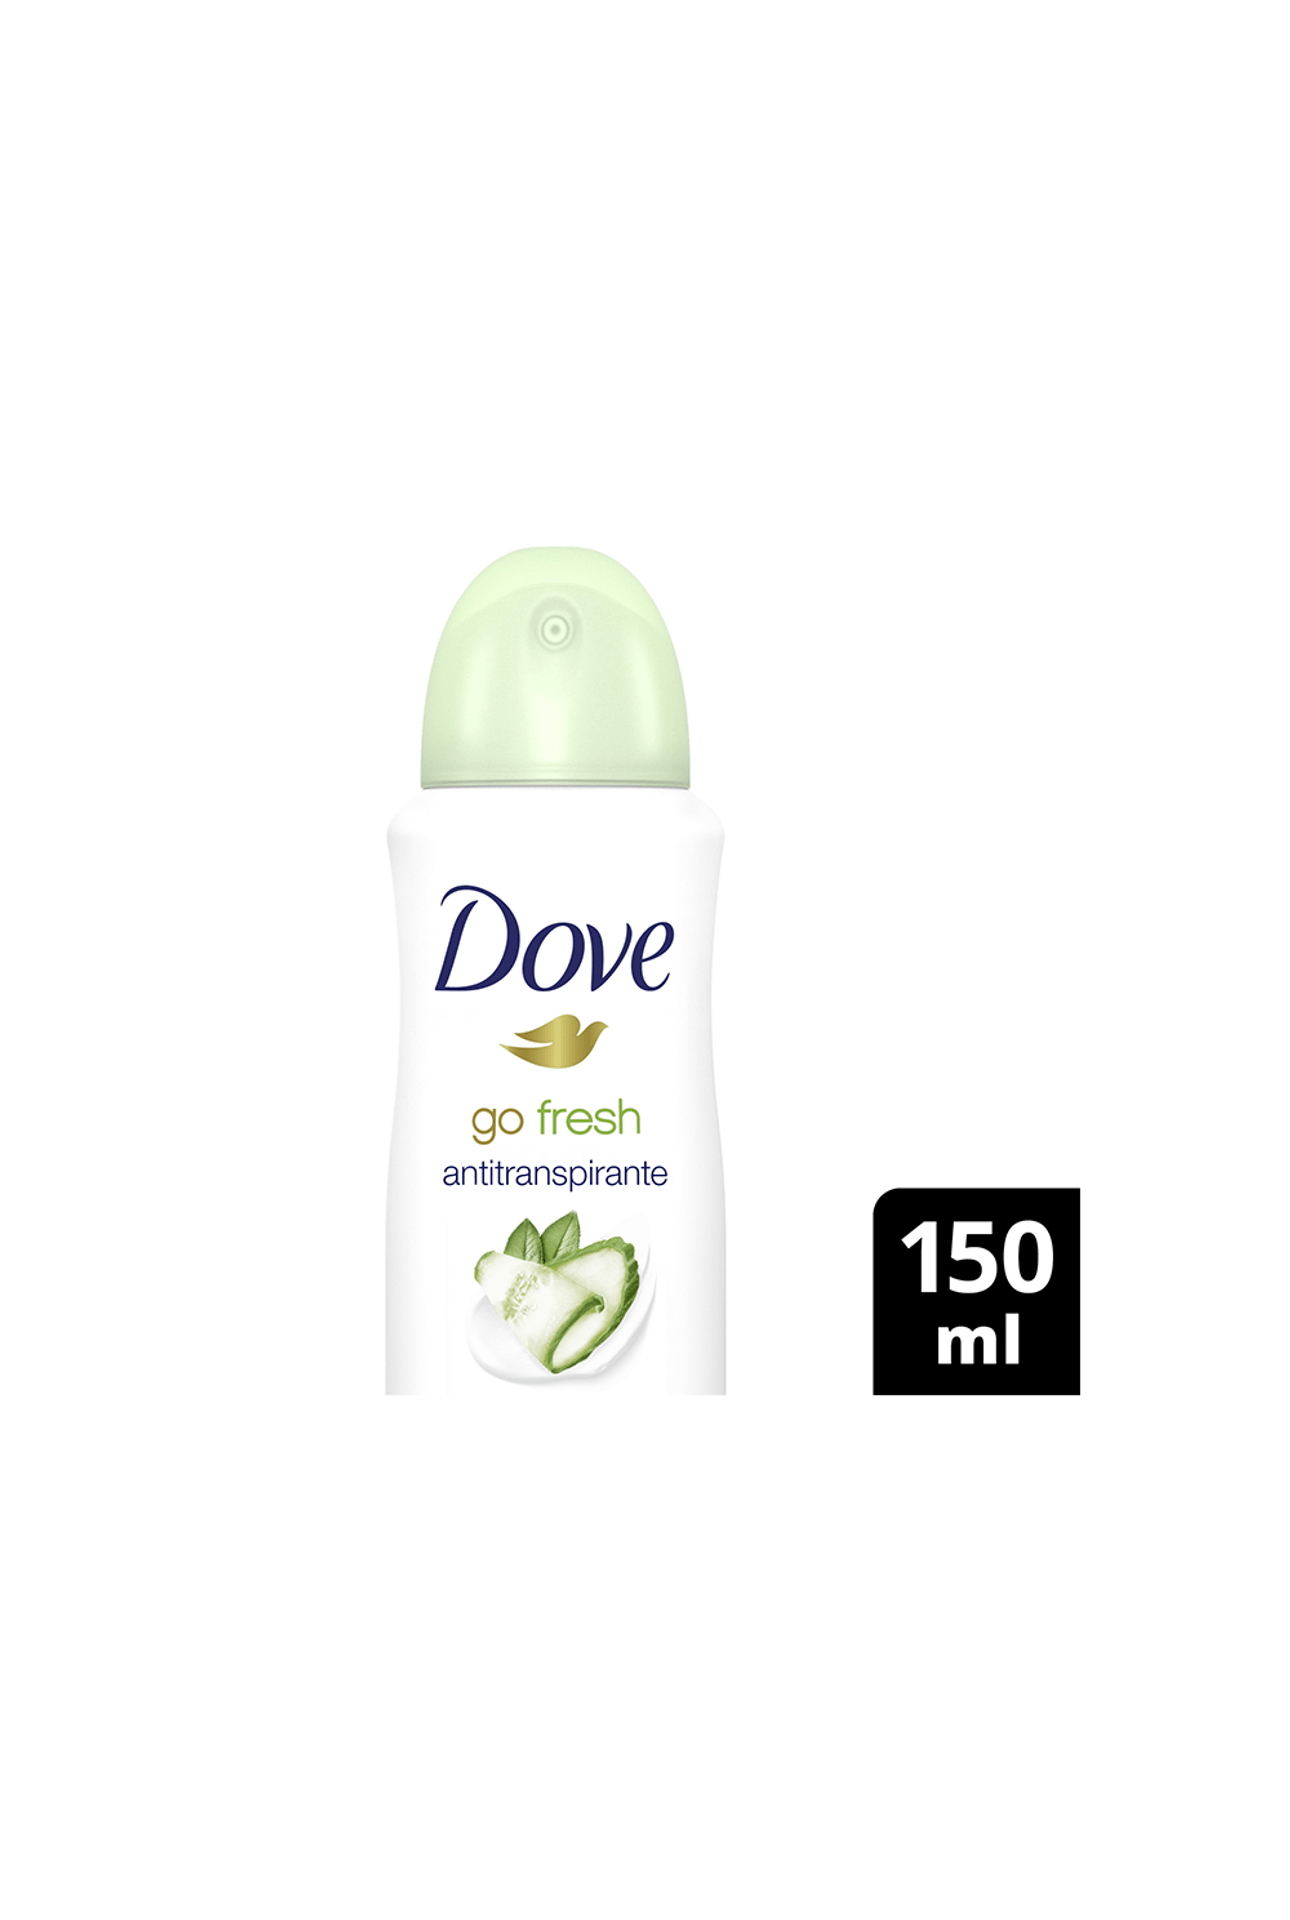 Dove-Antitranspirante-Dove-Go-Fresh-Pepino-x-150ml-7791293048475_img1